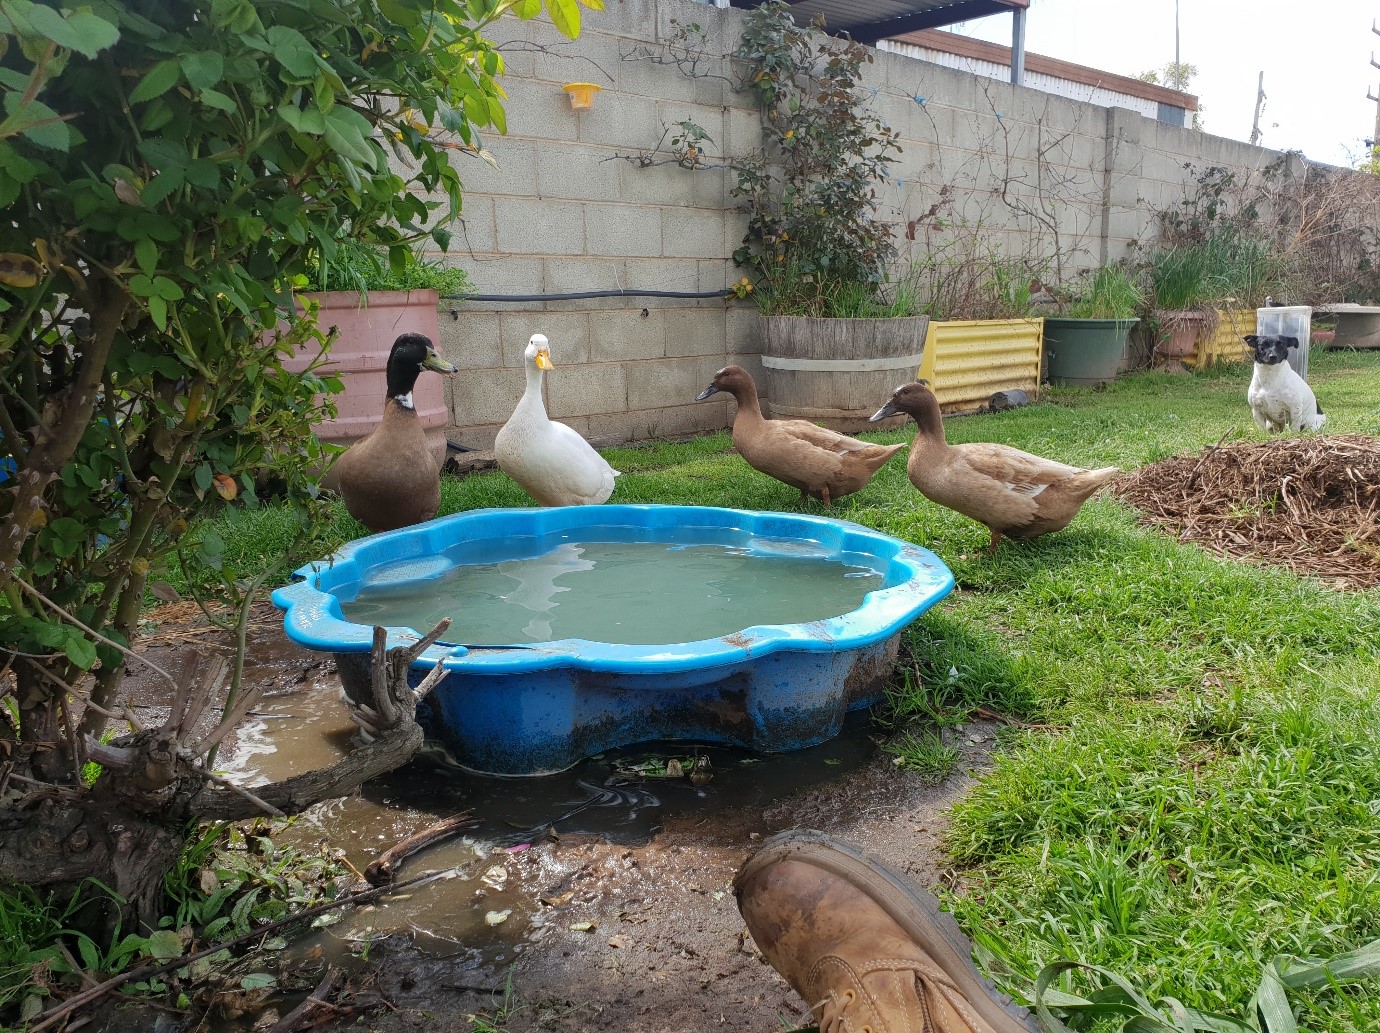 Four pet ducks around a plastic pond